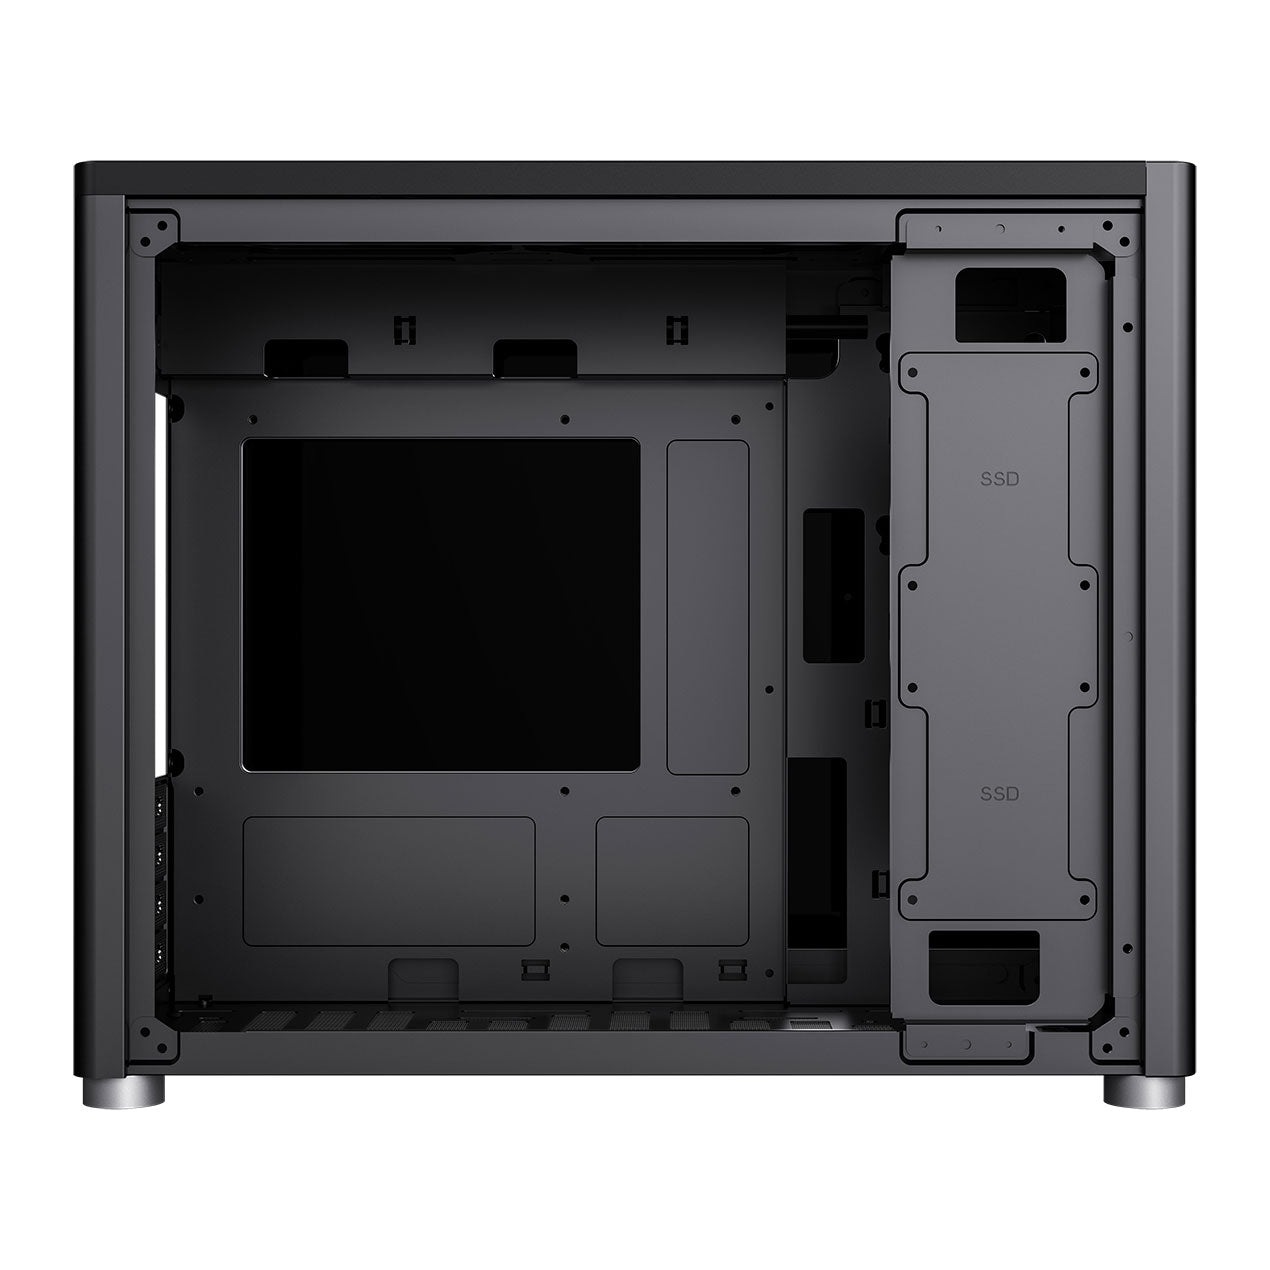 GameMax Black Spark Gaming Cube mATX Tempered Glass Panel PC Case